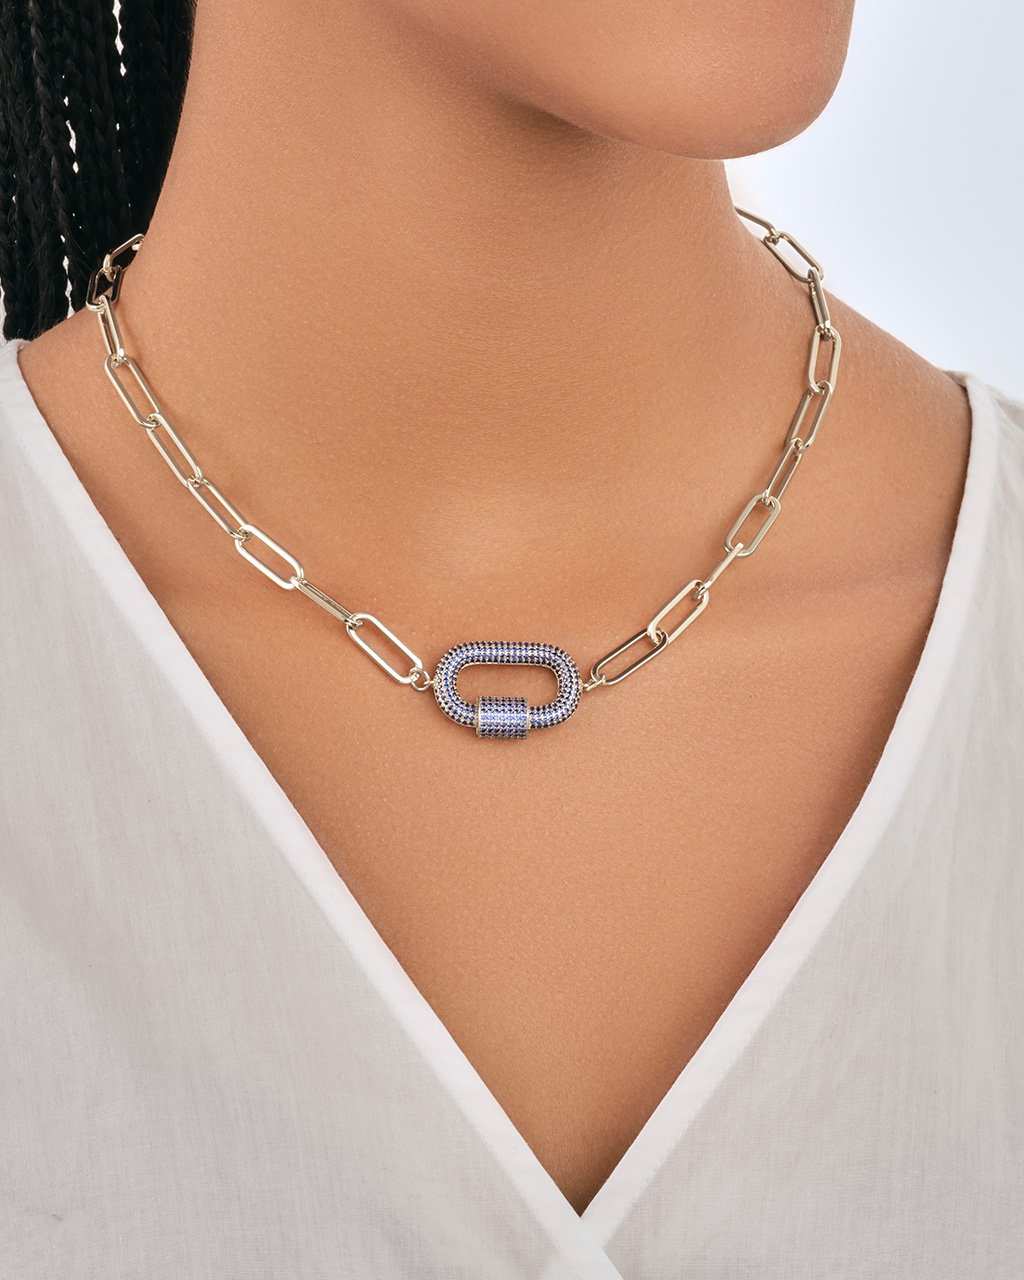 Pave CZ Carabiner Linked Lock Necklace Necklace Sterling Forever 